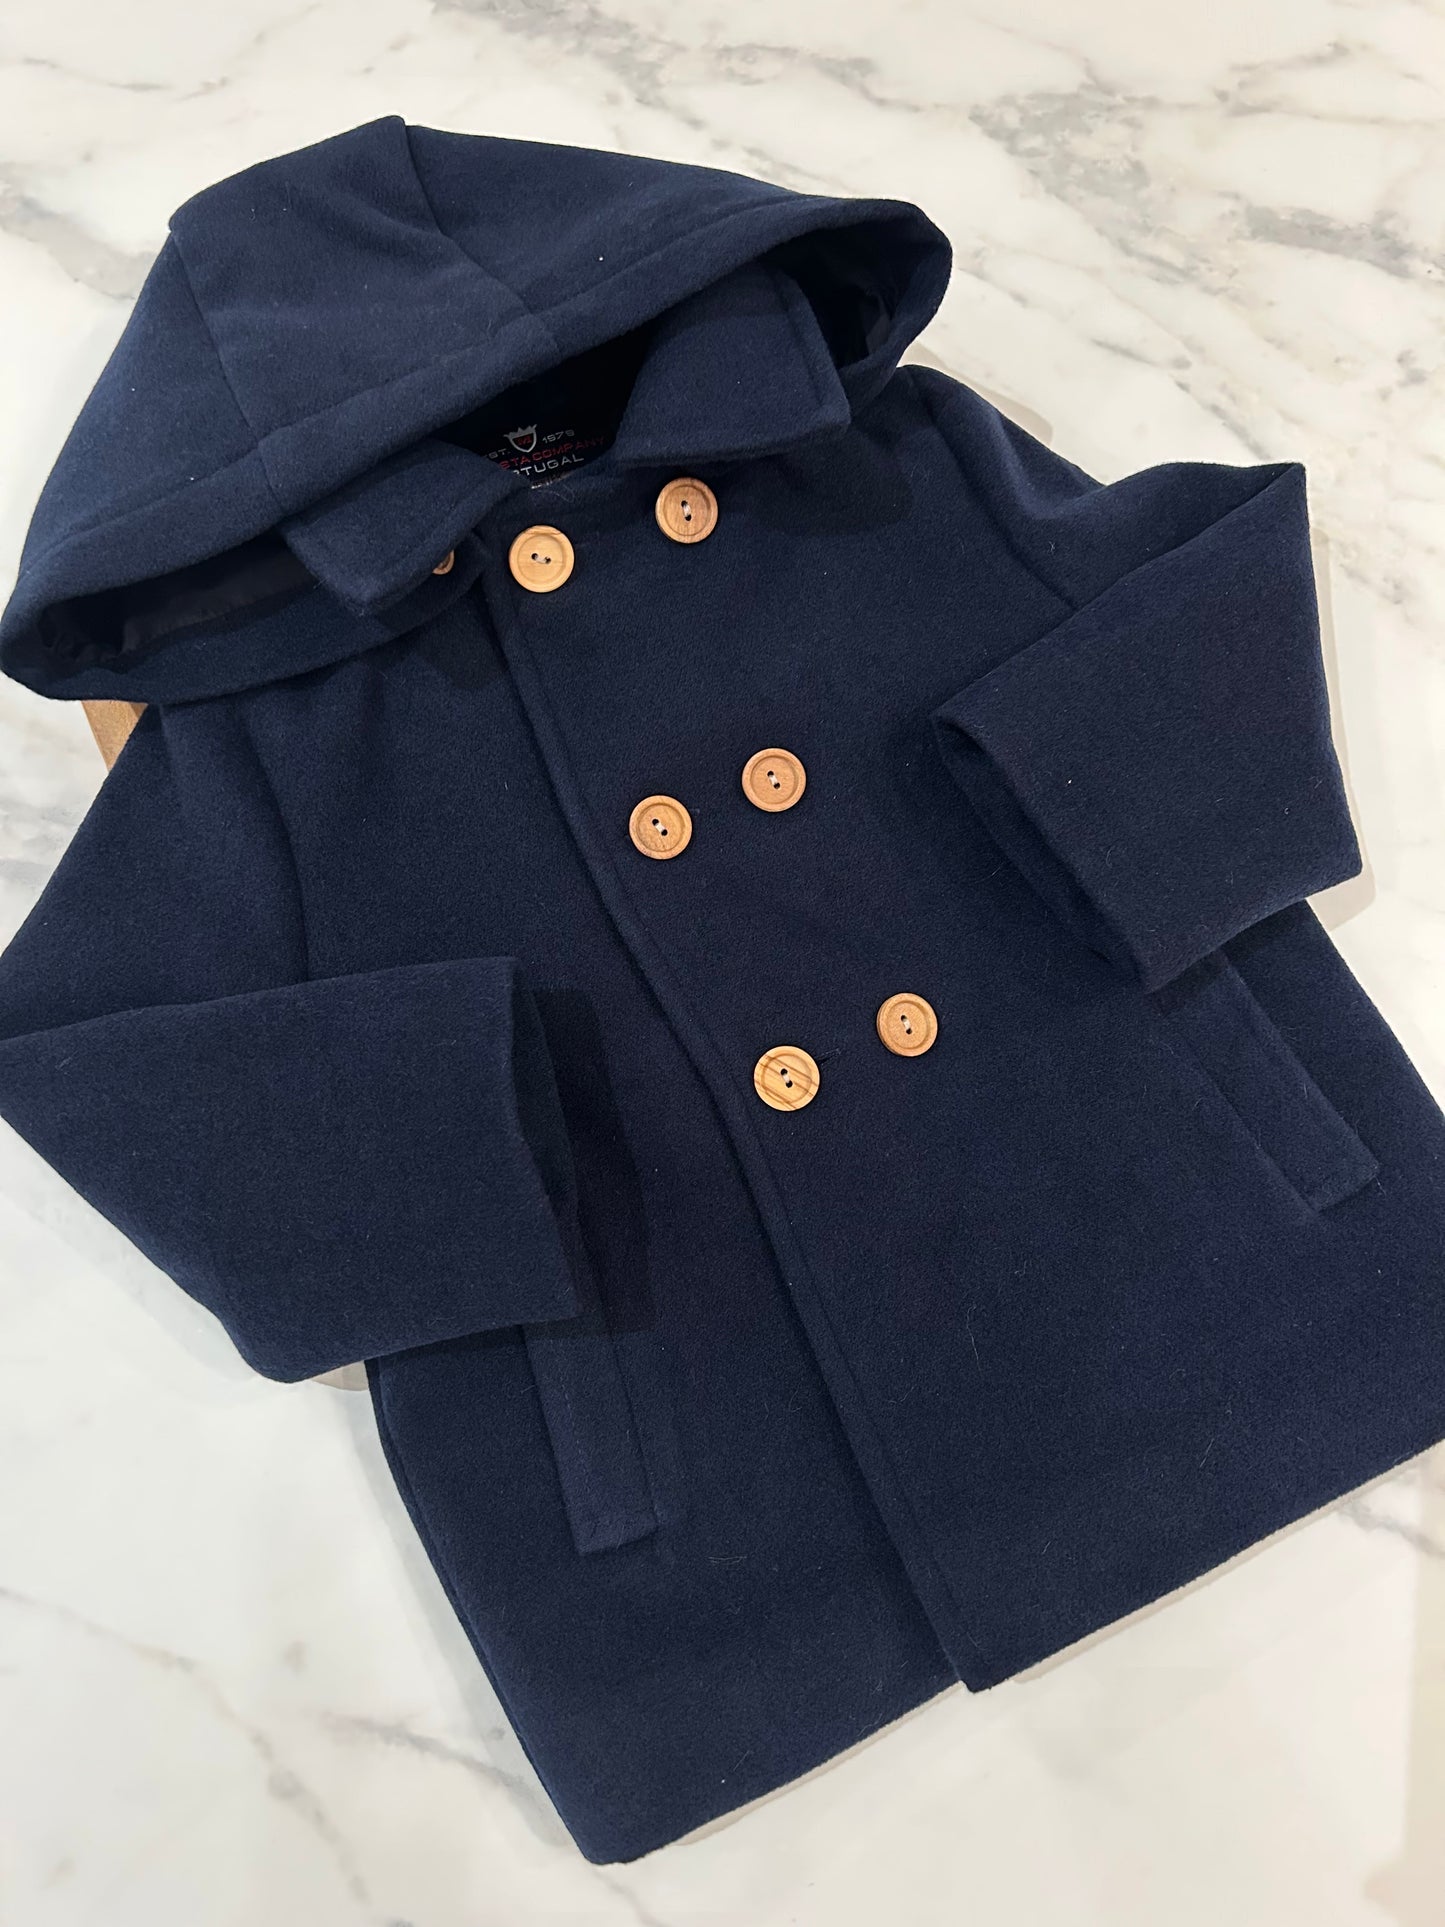 Navy coat classic